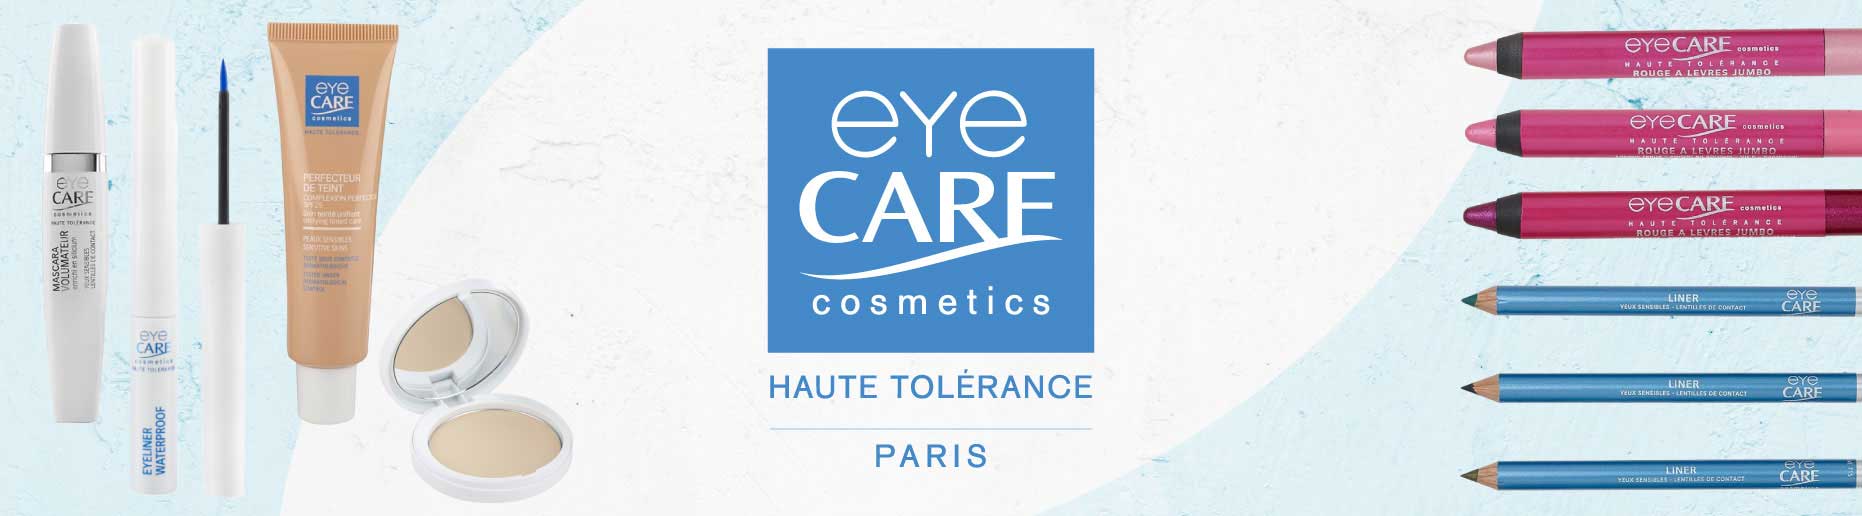 eye care cosmetics Portugal